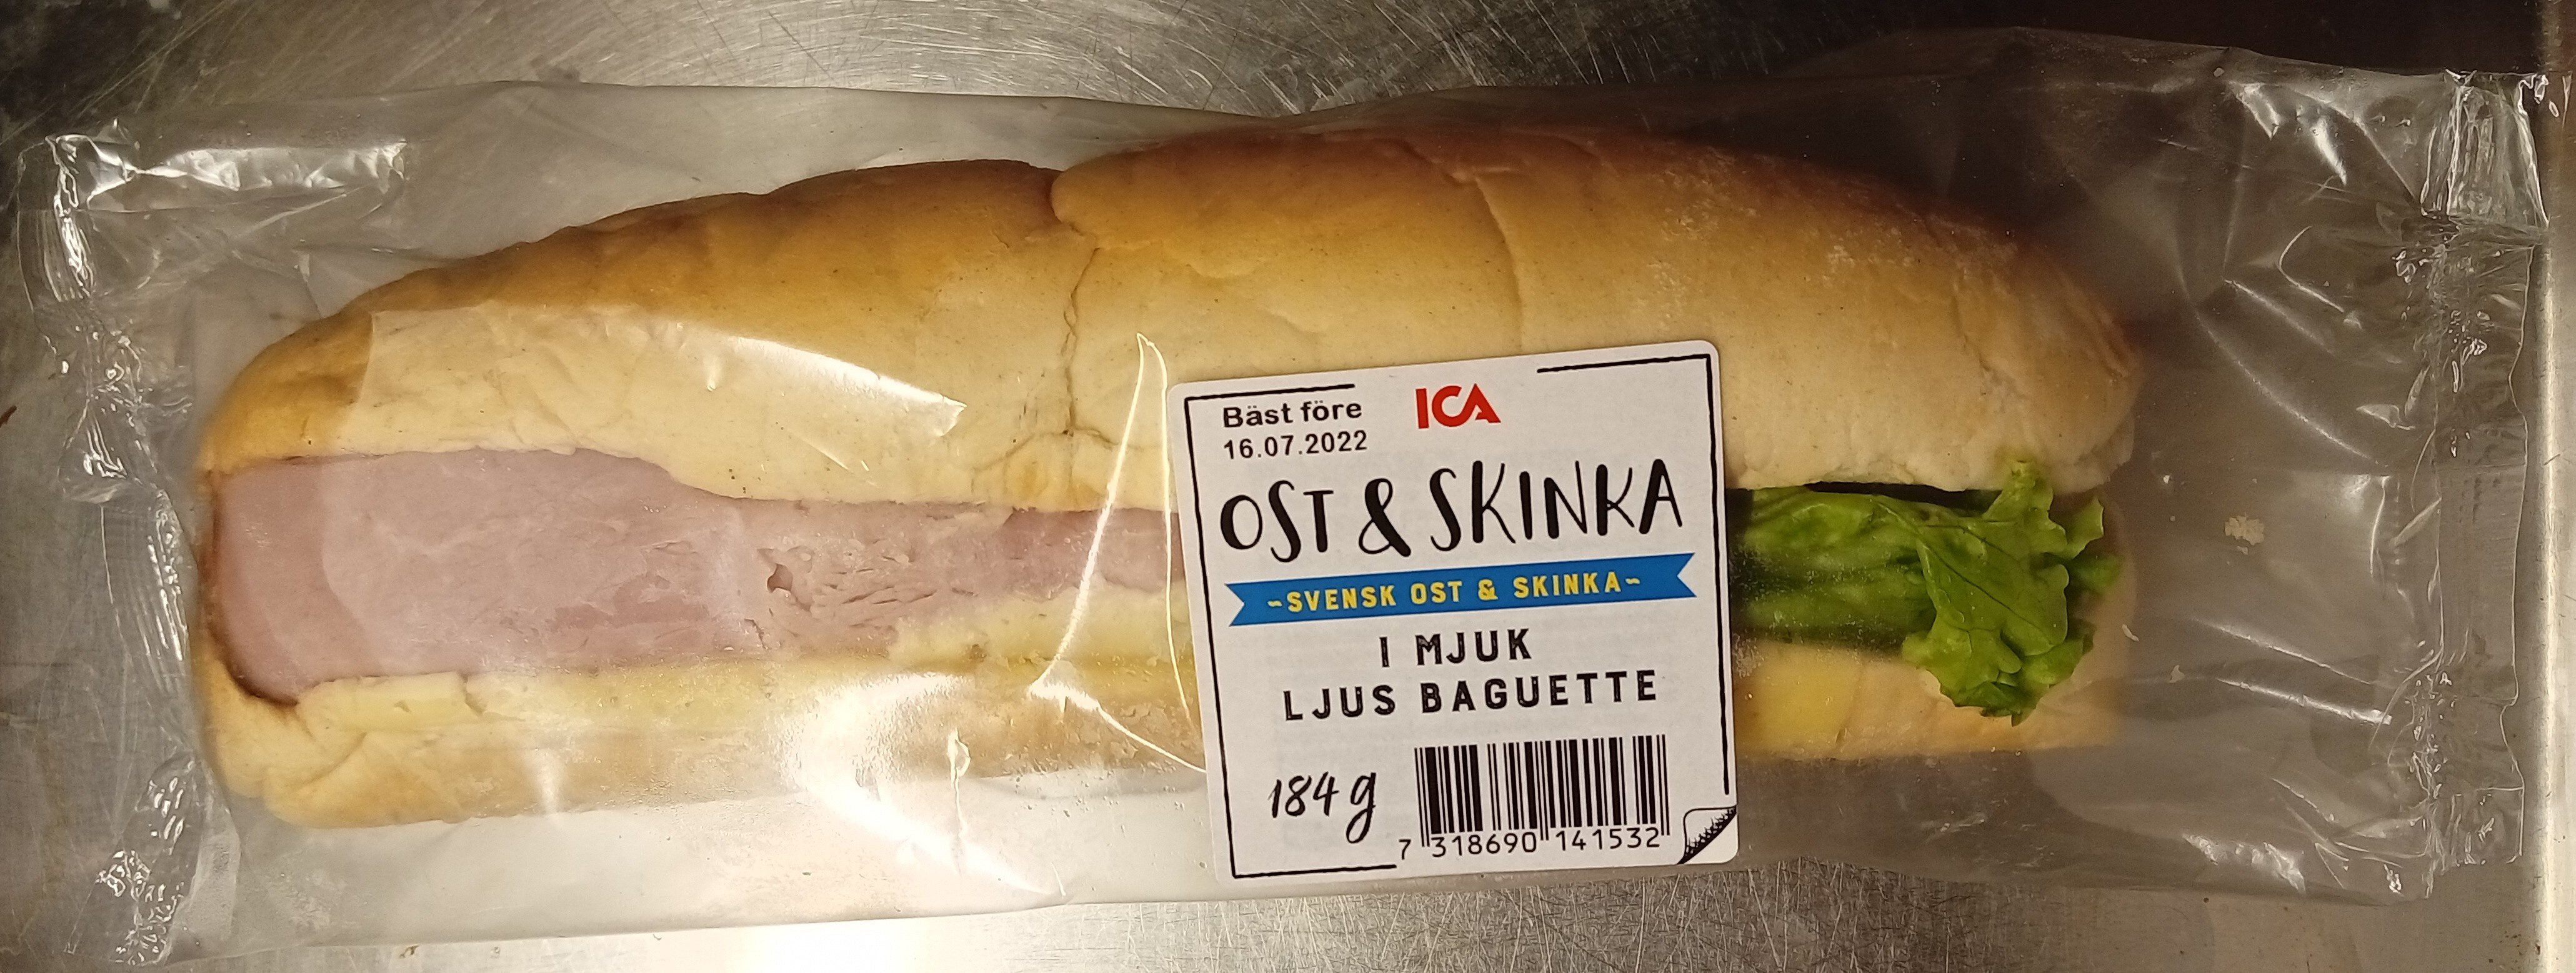 ICA Ost & skinka i mjuk ljus baguette - Produkt - sv